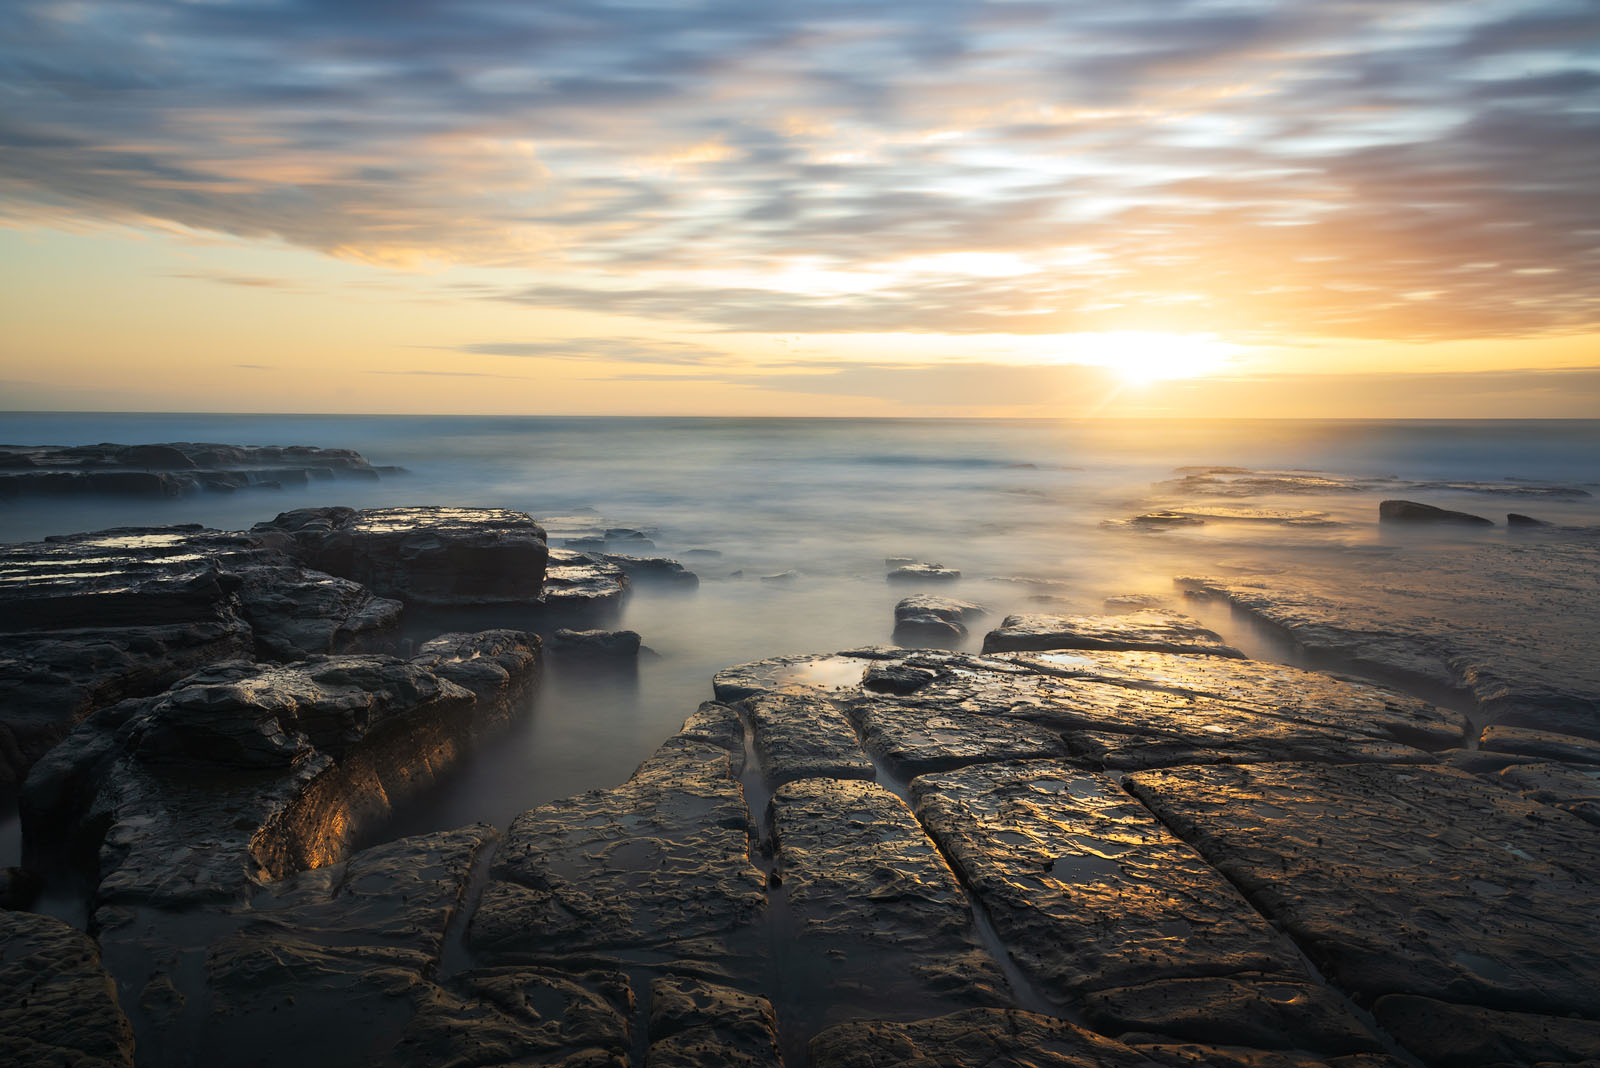 Golden sunrise over the textured rocks and calm sea at Bulgo Beach.